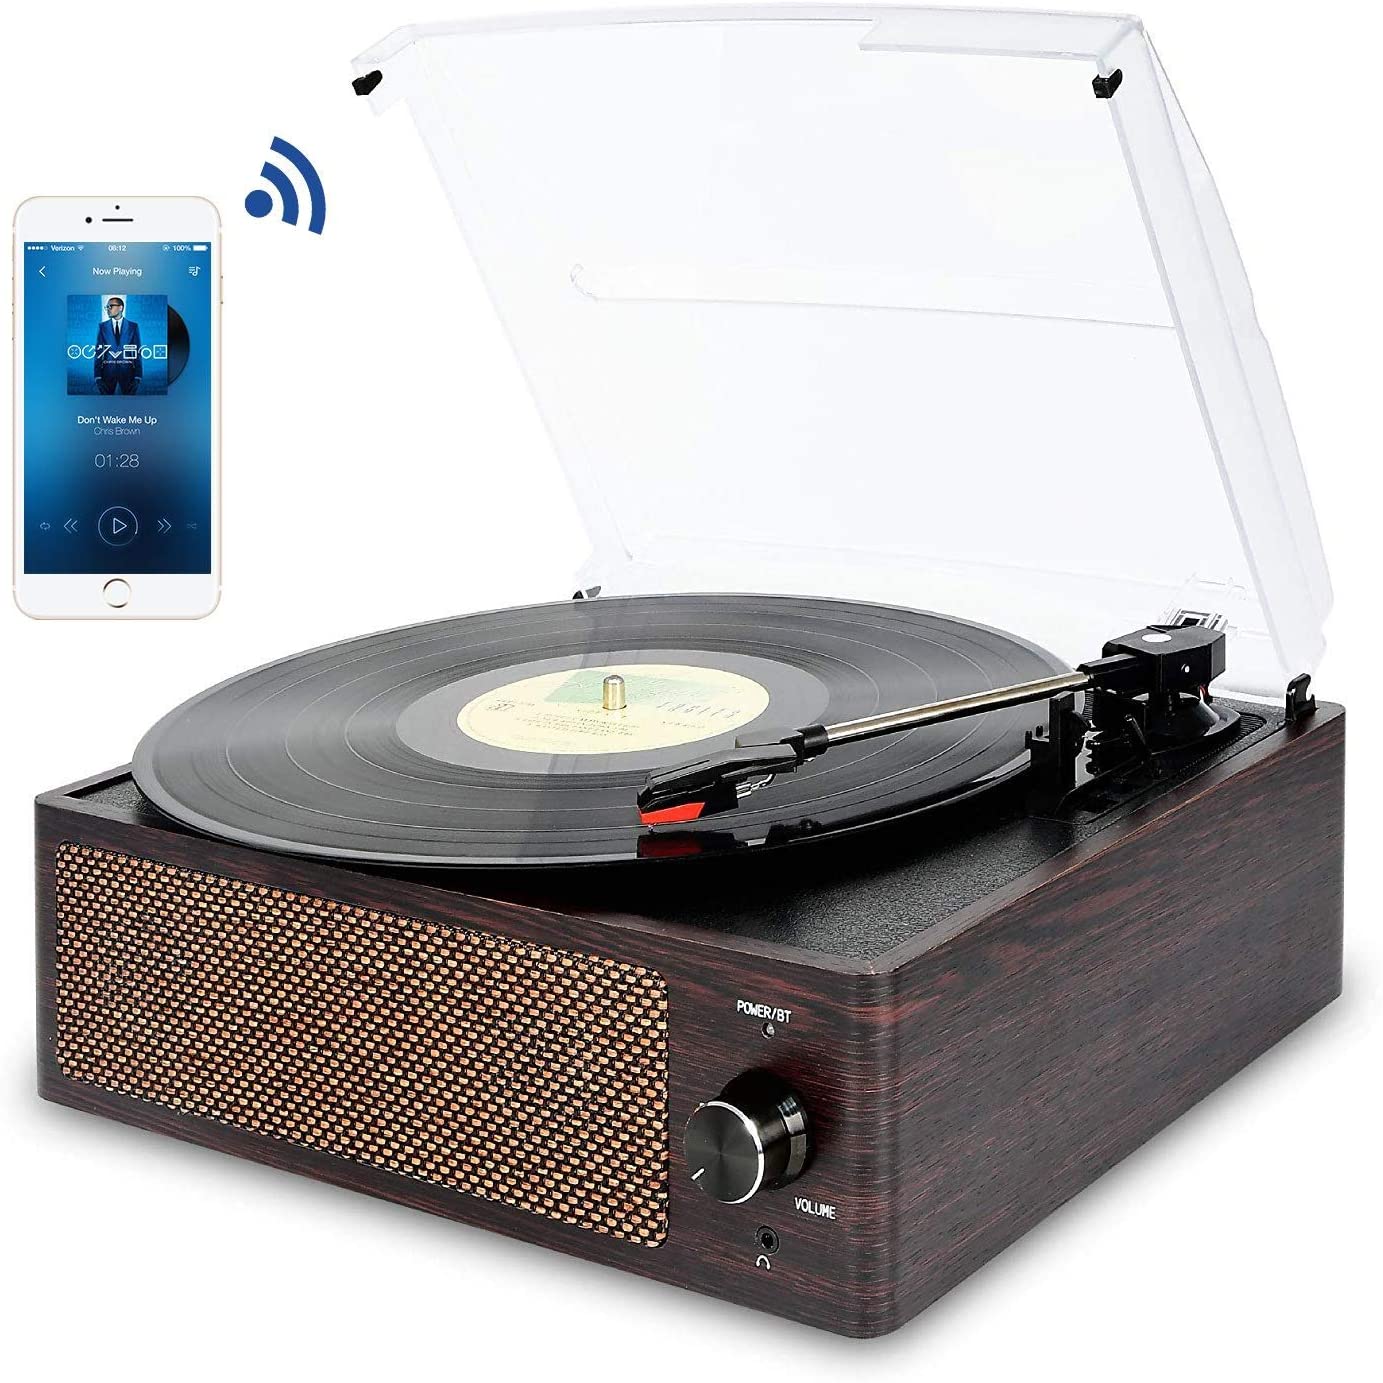 3-speed Turntable Vinyl LP Record Player Converter Built-in Stereo Speakers 